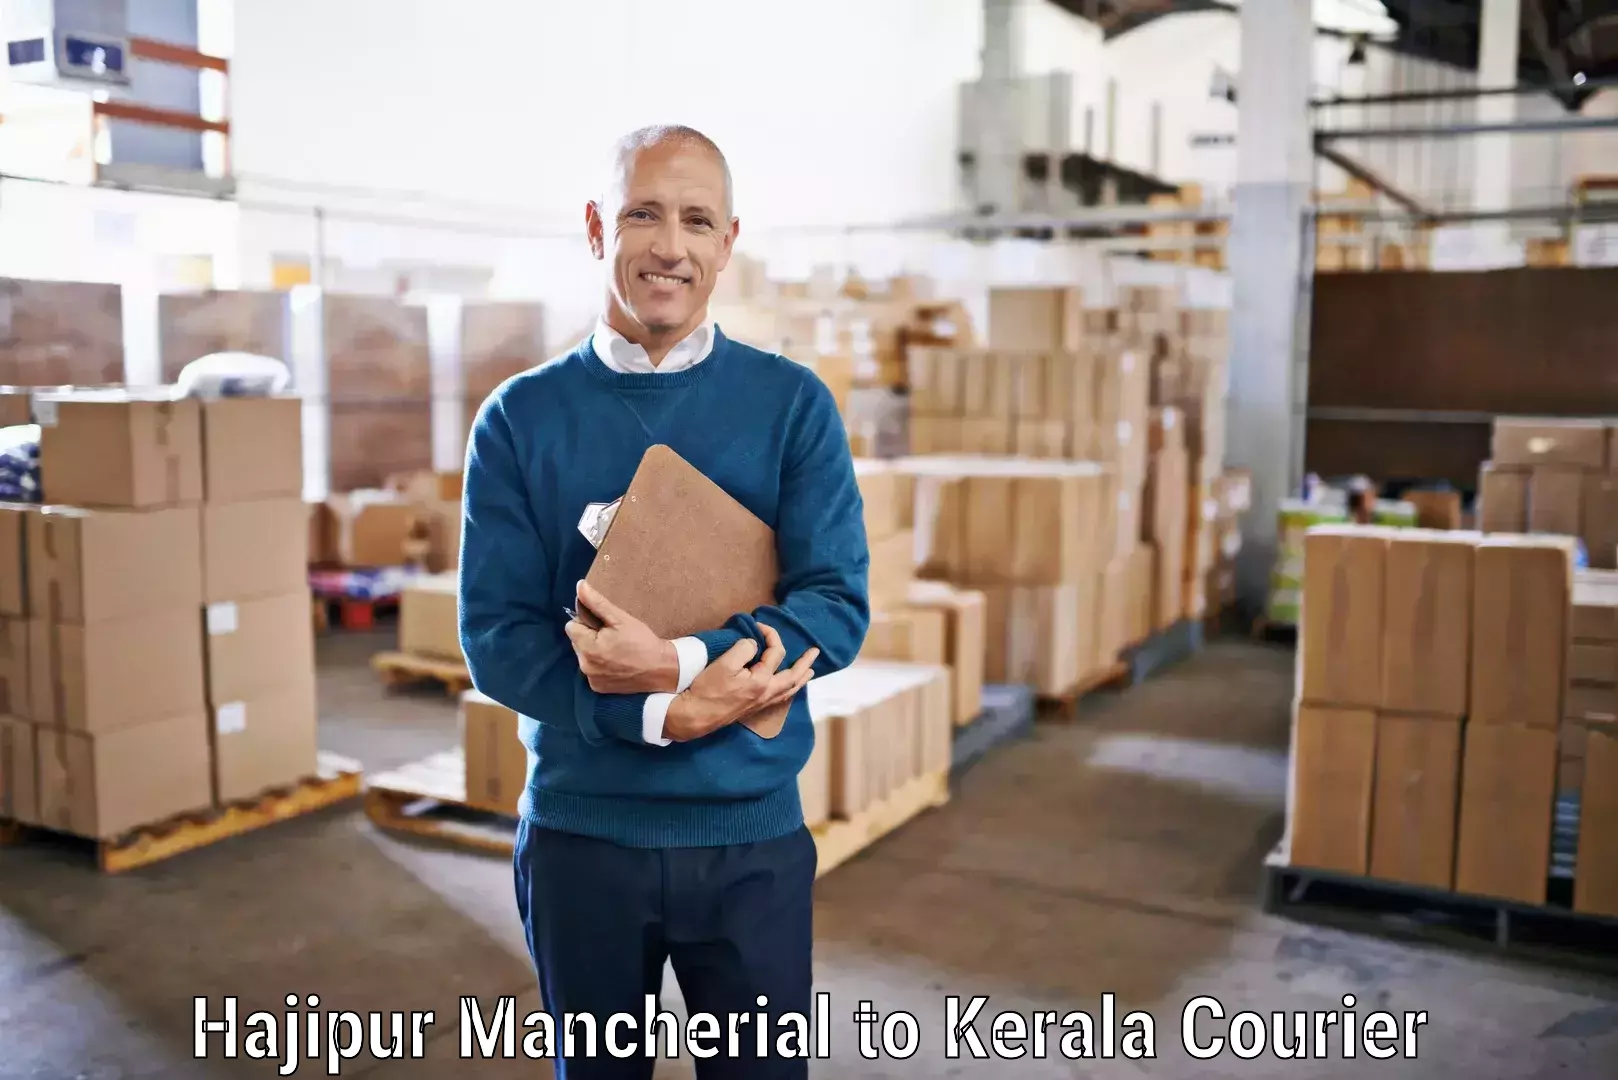 Courier service comparison Hajipur Mancherial to Kerala